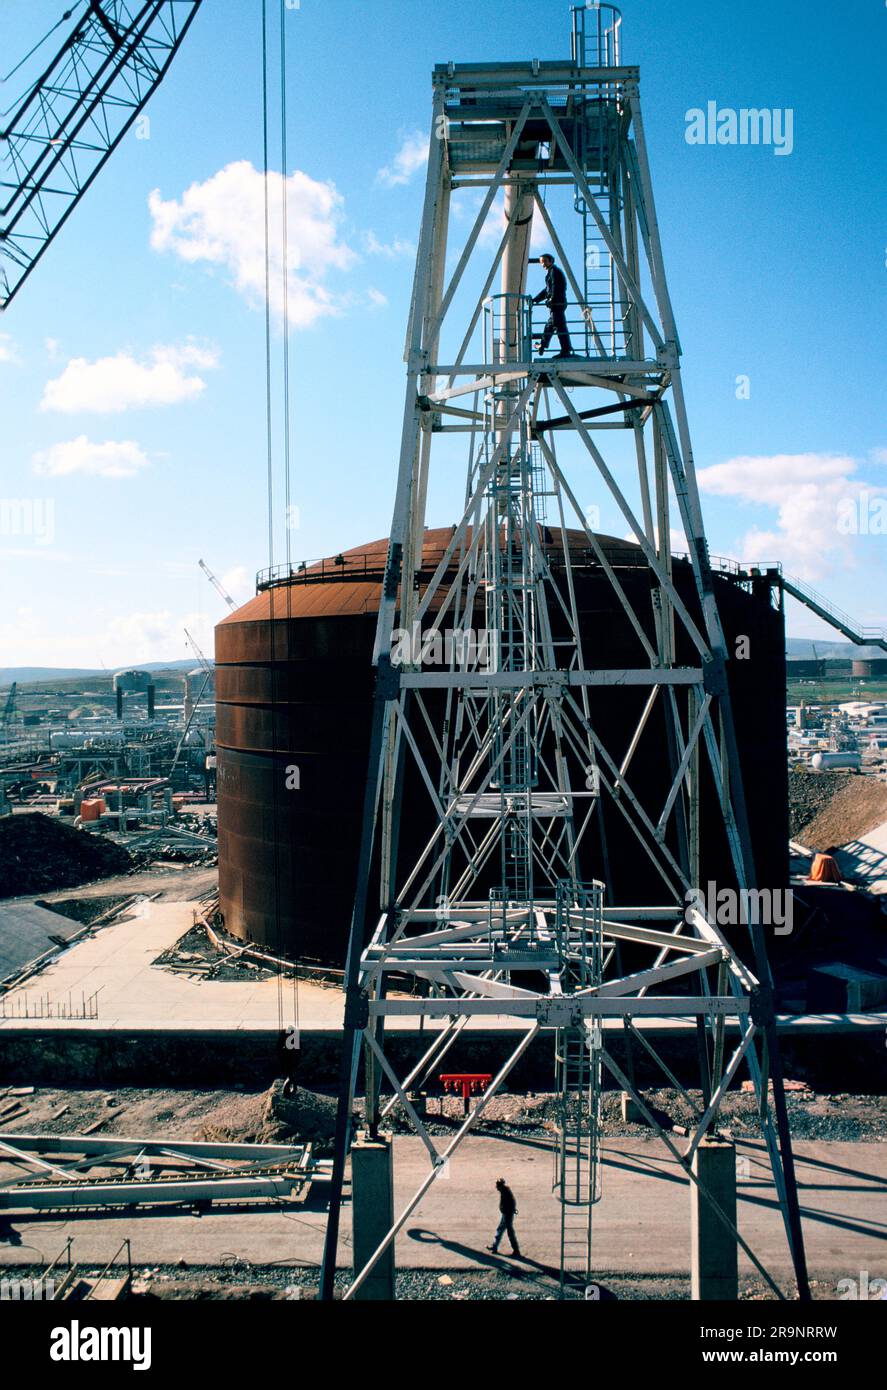 North Sea oil at Sullom Voe Terminal under construction. Oil storage tanks for British Petroleum (BP). Sullom Voe, Shetlands Mainland, Shetland Islands, Scotland, circa 1979. UK 1970S HOMER SYKES Stock Photo